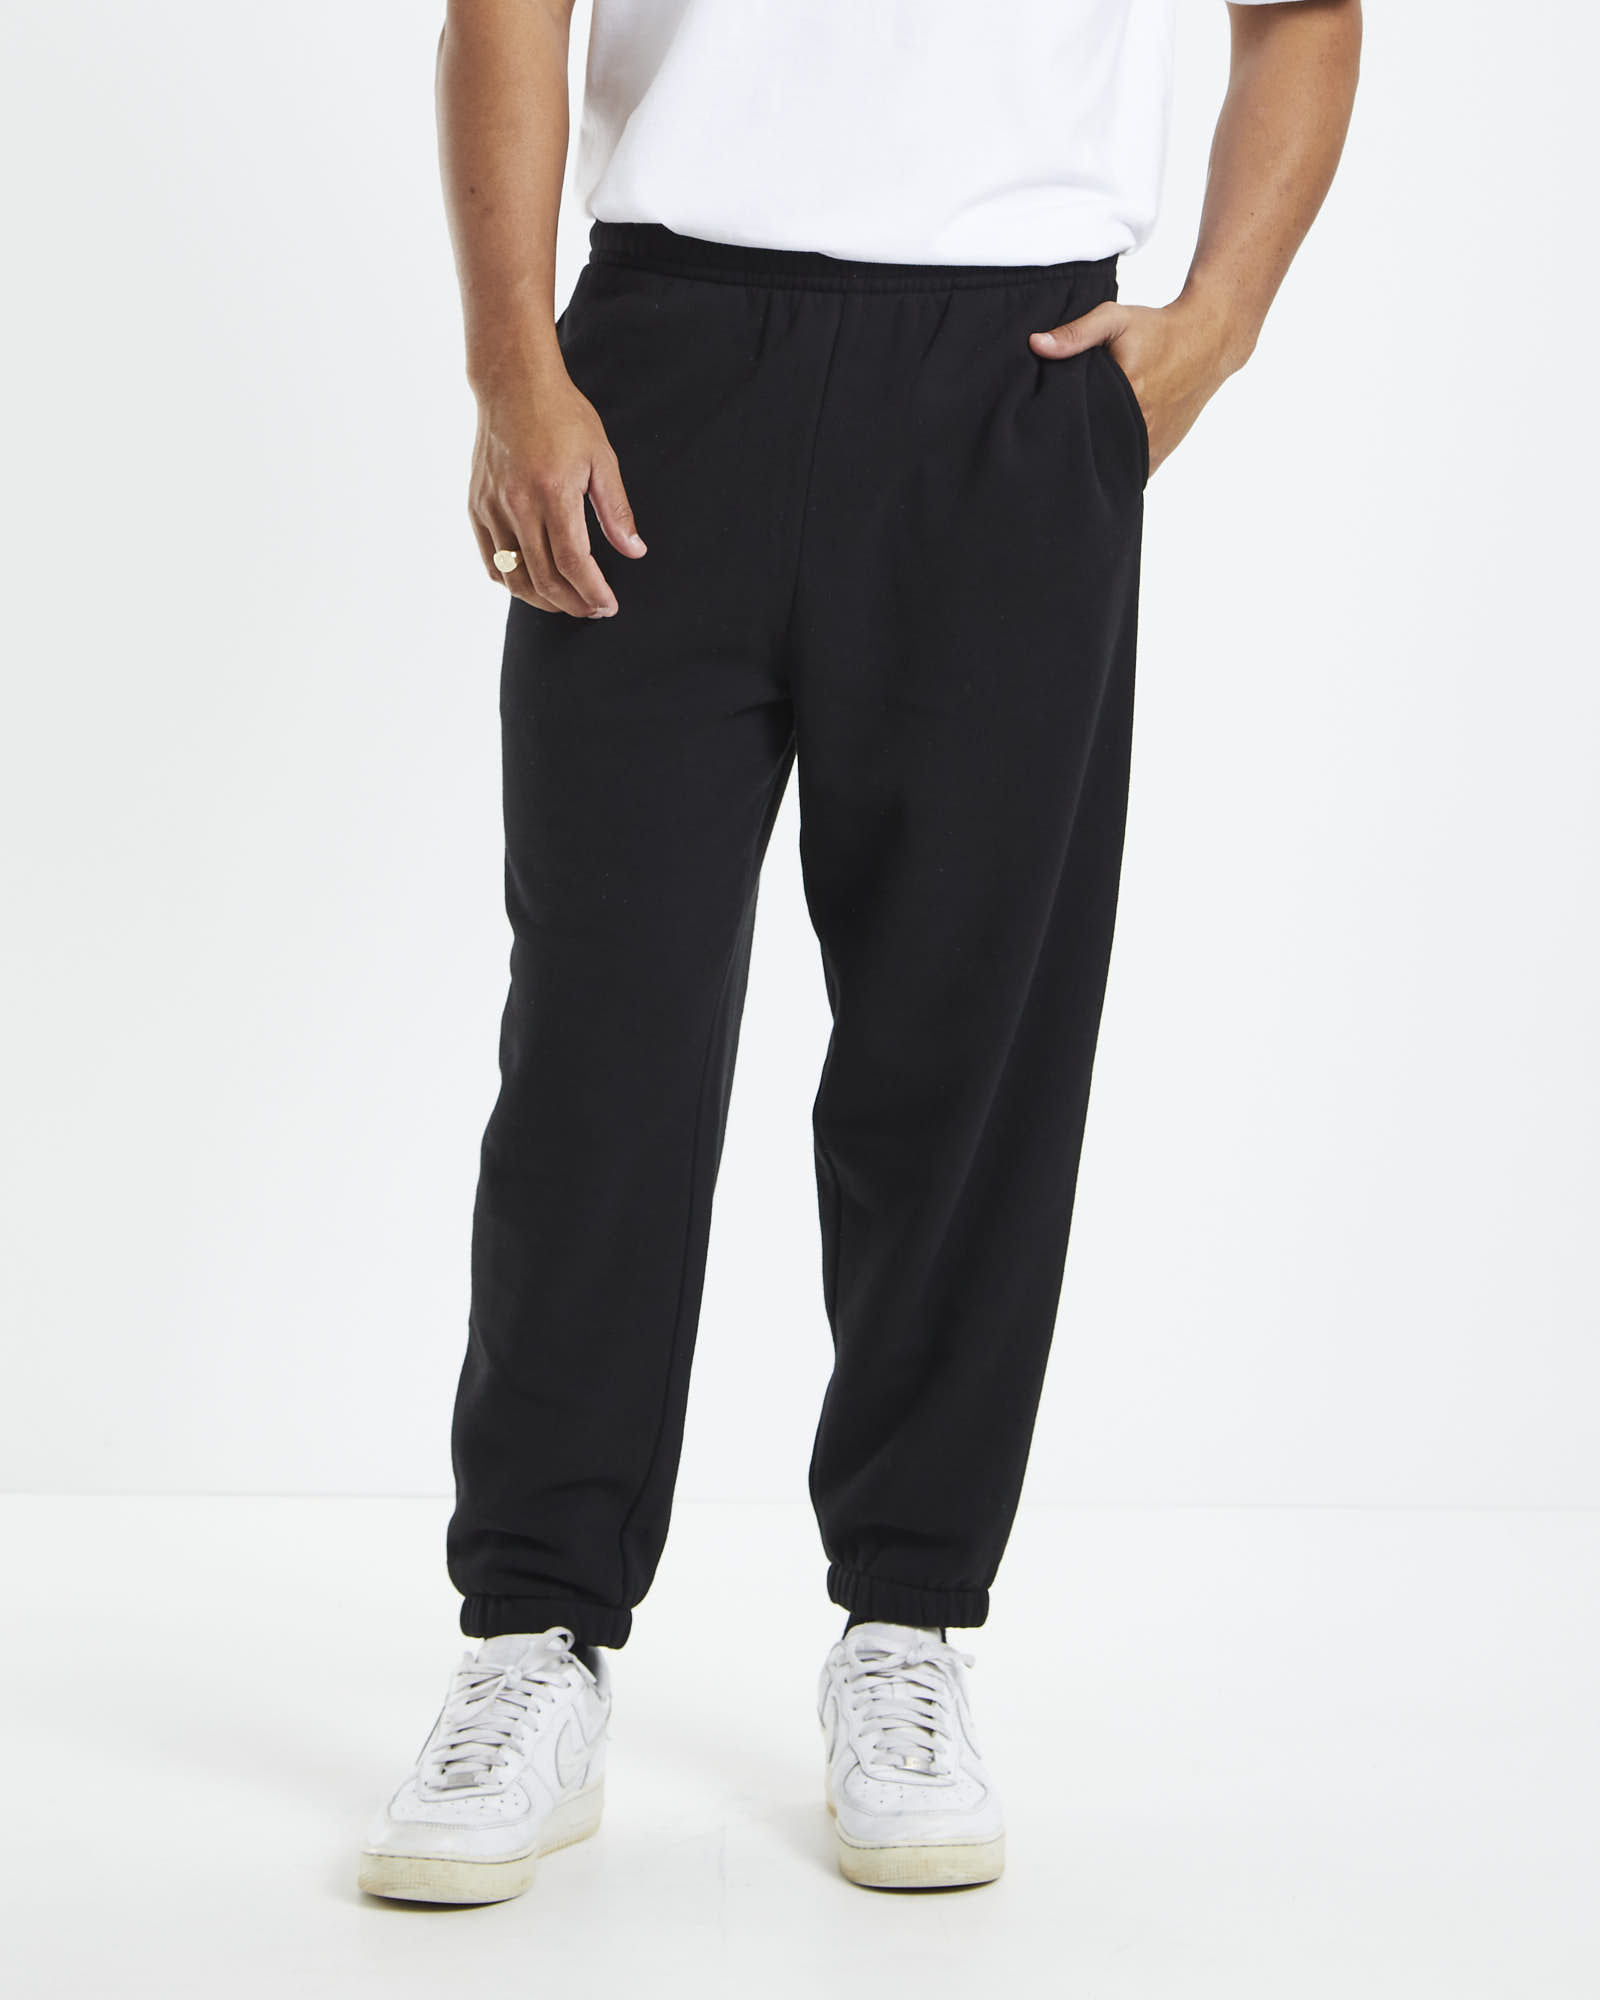 General Pants Co. Basics Sweat Pants - Black | SurfStitch